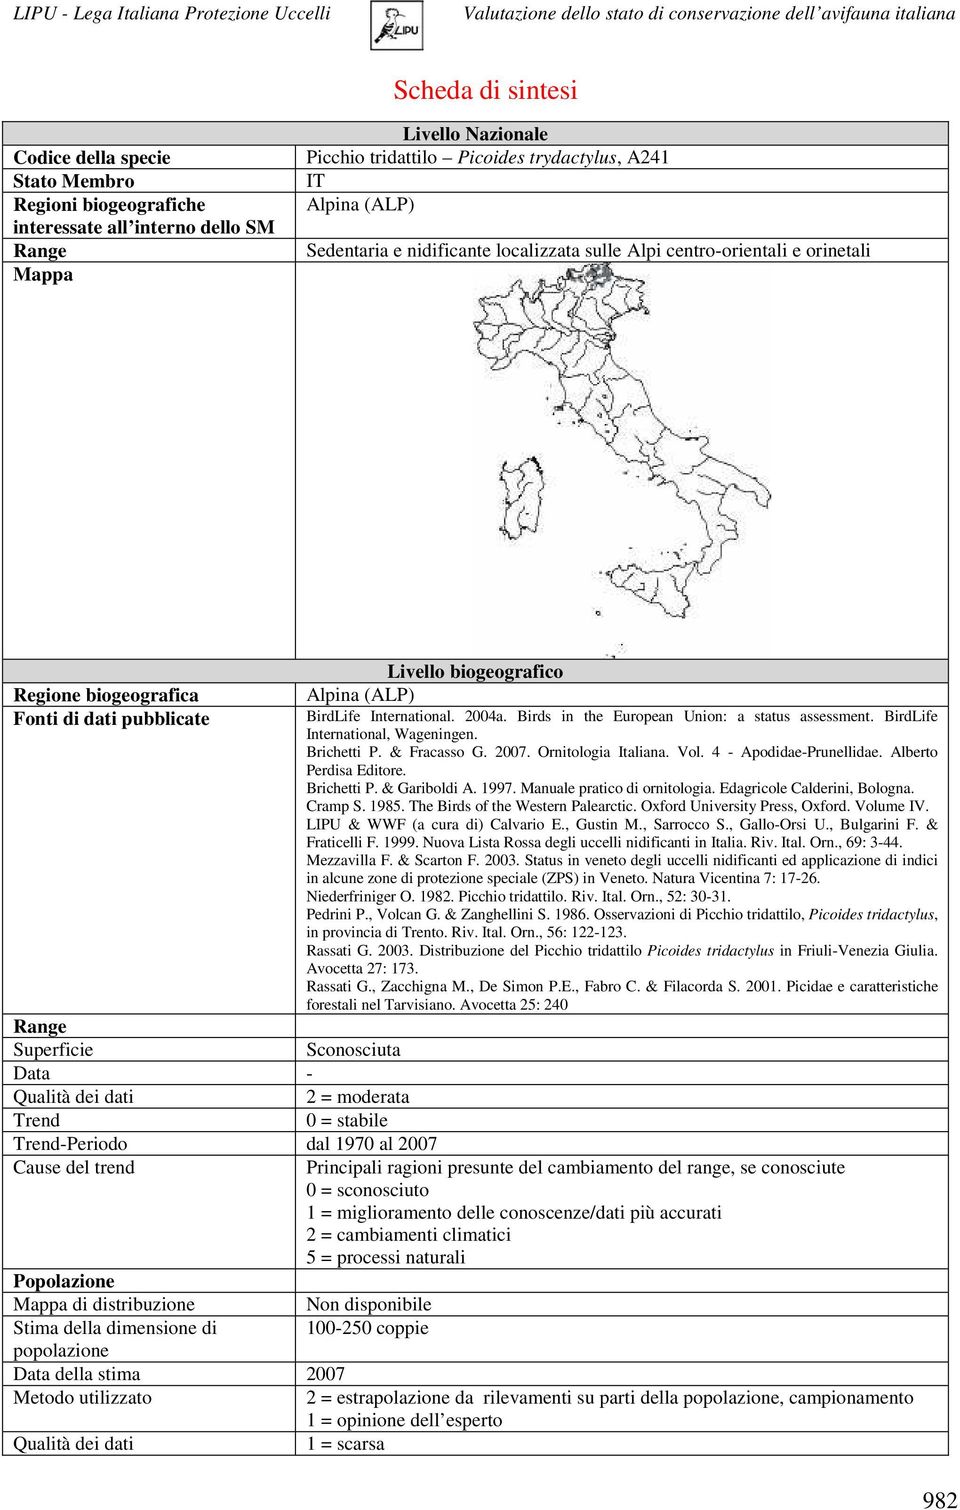 Birds in the European Union: a status assessment. BirdLife International, Wageningen. Brichetti P. & Fracasso G. 2007. Ornitologia Italiana. Vol. 4 - Apodidae-Prunellidae. Alberto Perdisa Editore.